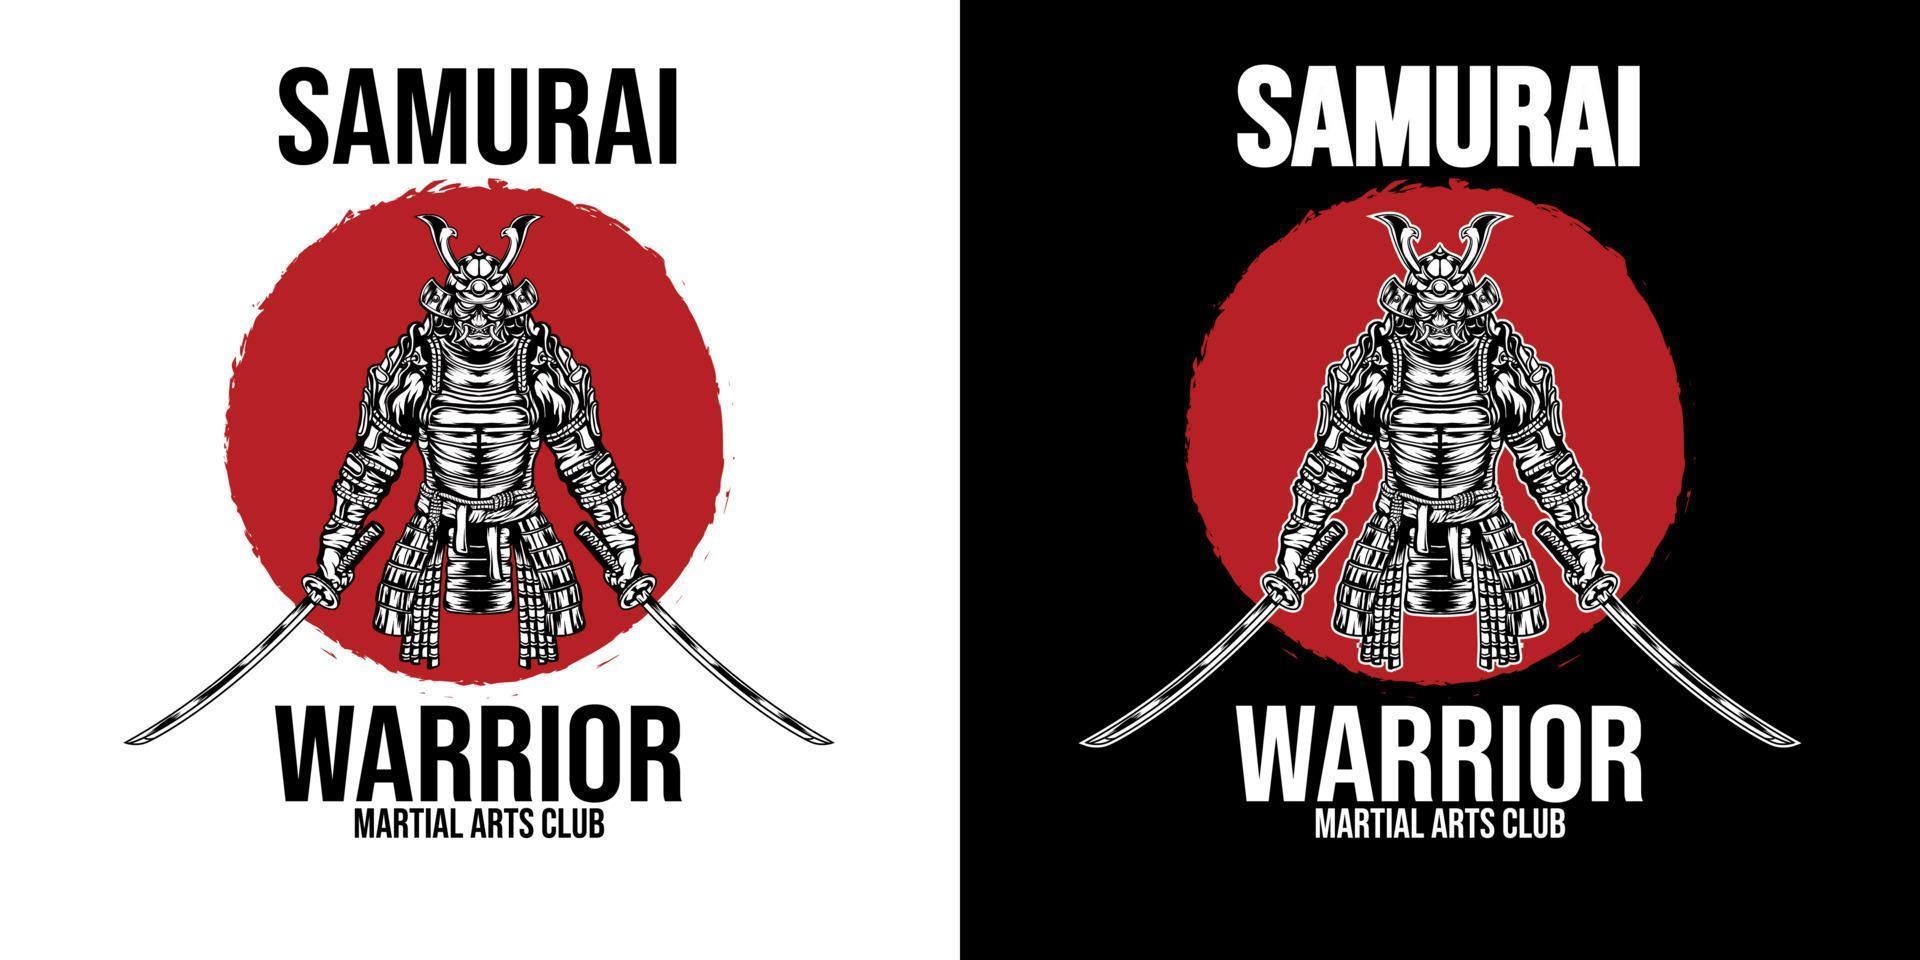 Japanischer Samurai-Krieger-Kampfkunstverein vektor